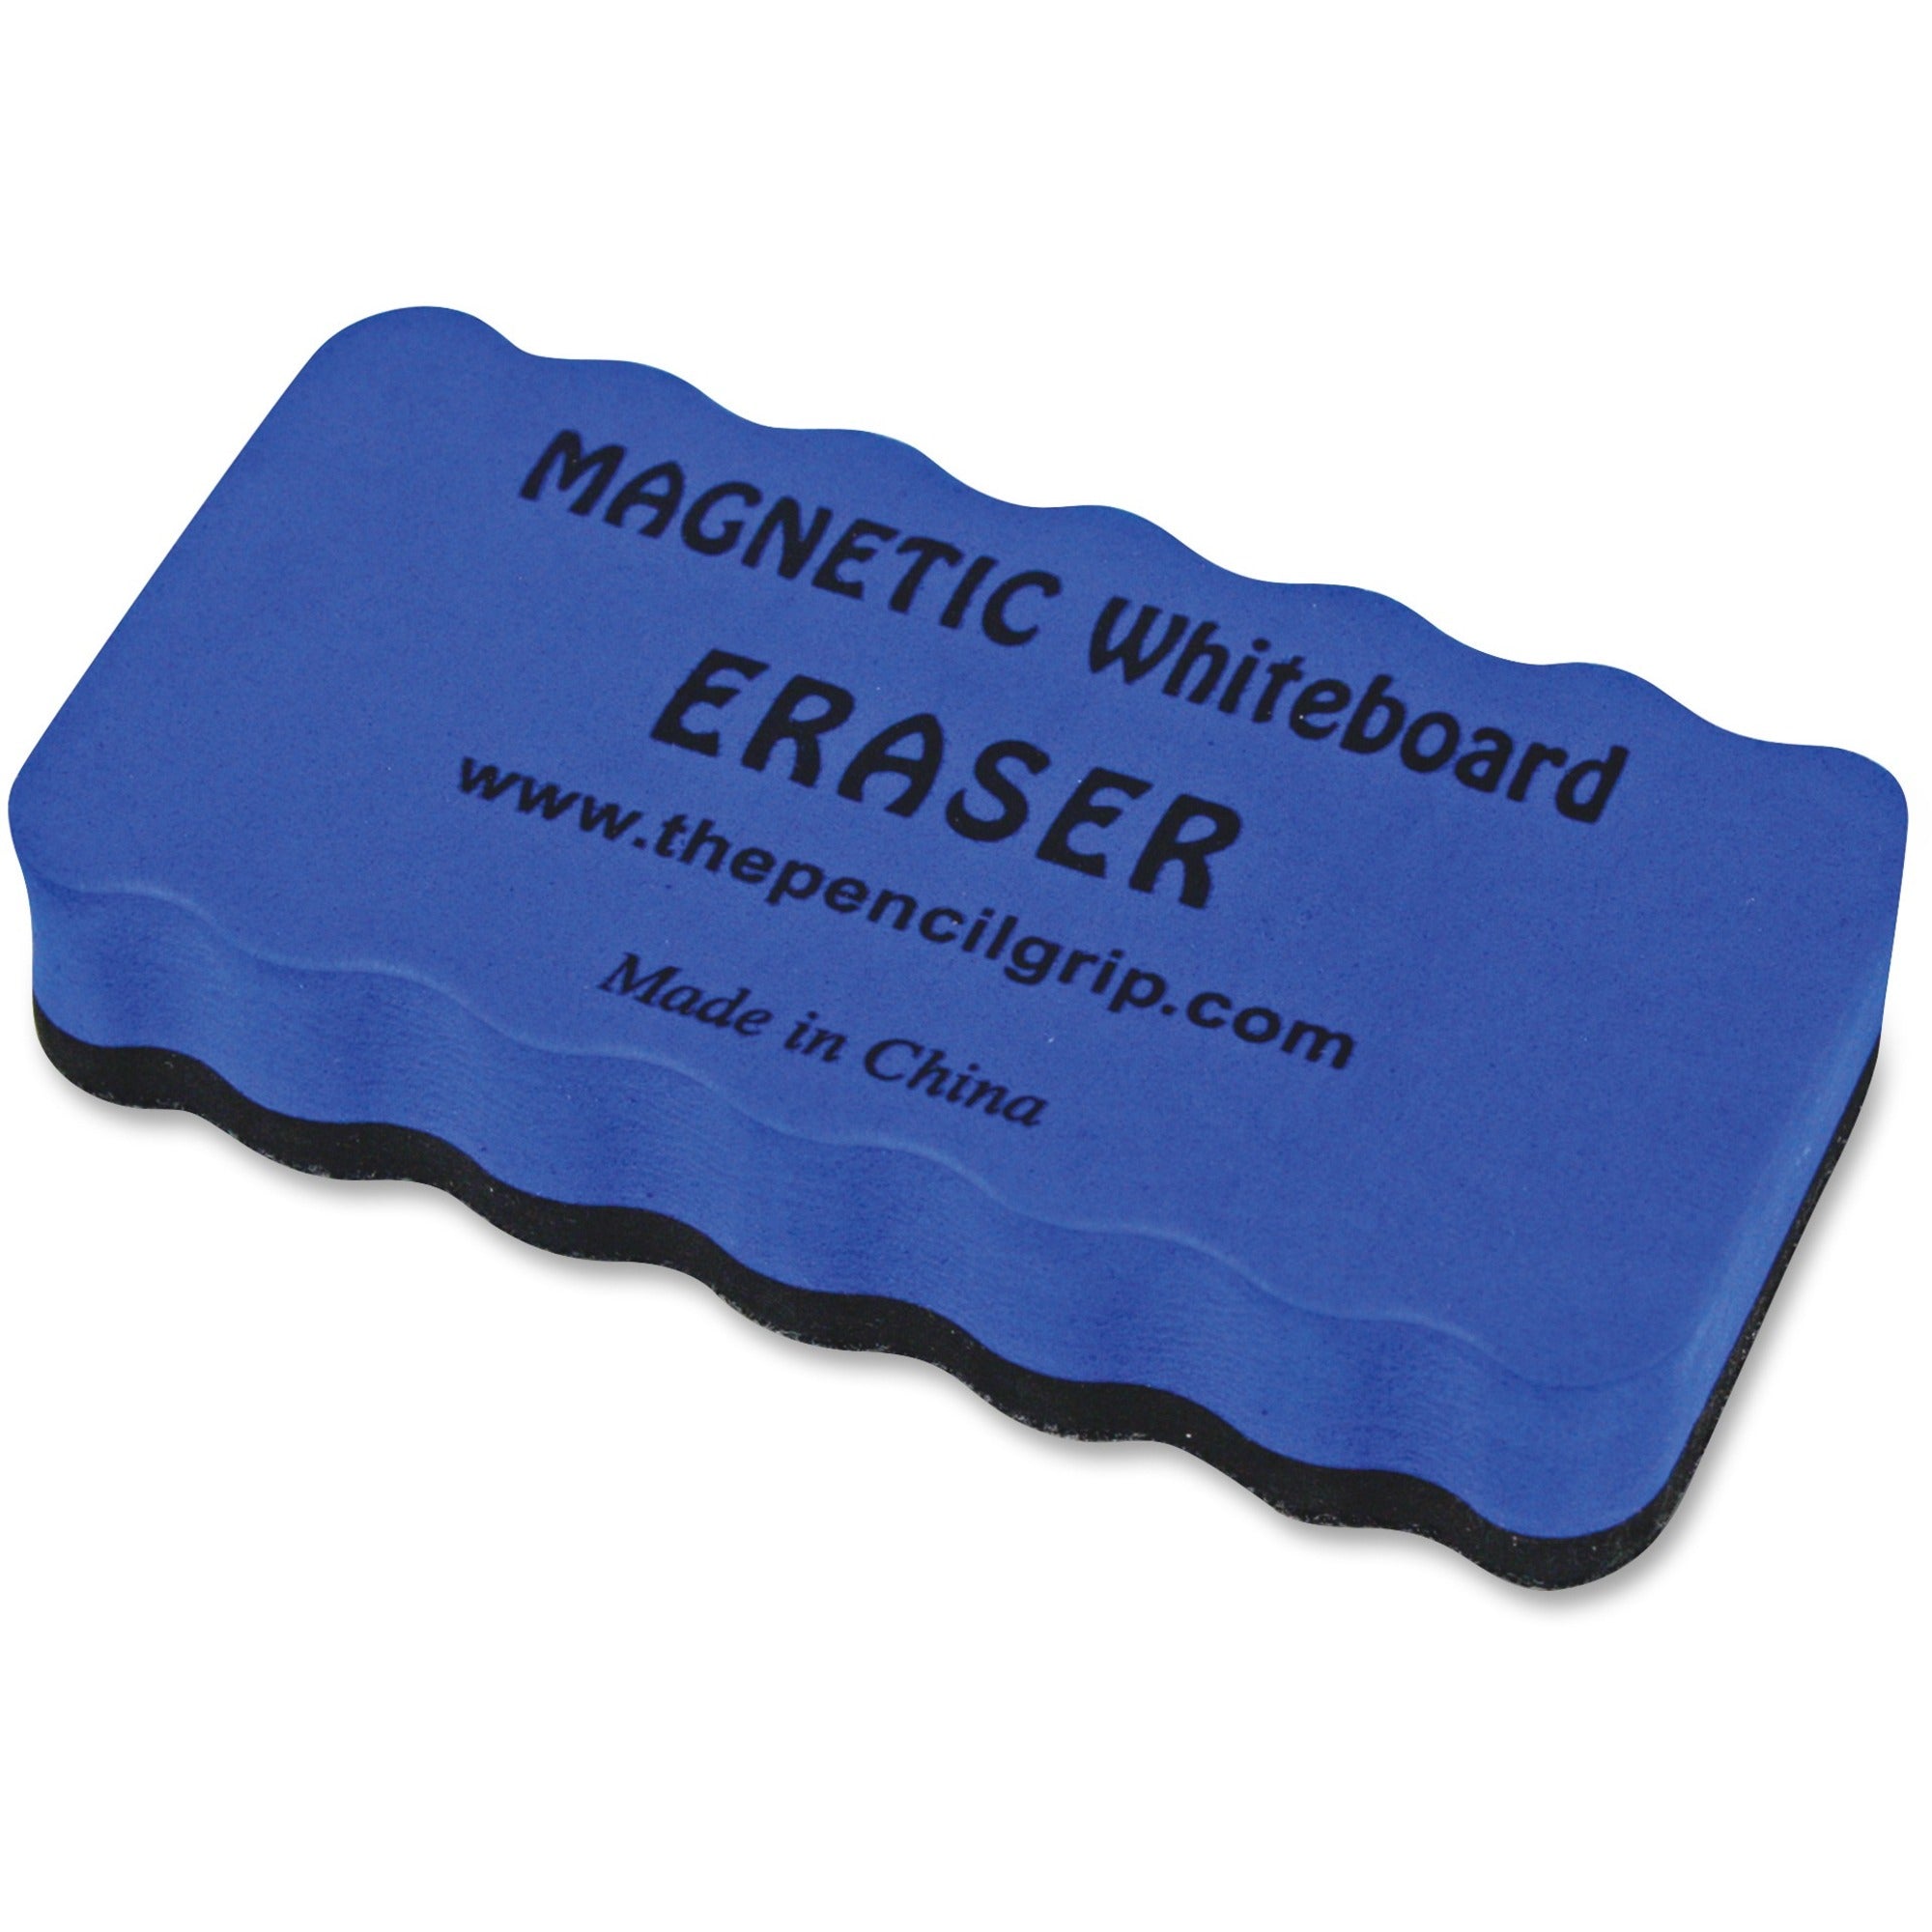 The Pencil Grip Magnetic Whiteboard Eraser - 2" Width x 4" Length - Ergonomic Design, Soft, Dirt Resistant, Magnetic - Blue - 1Each - 